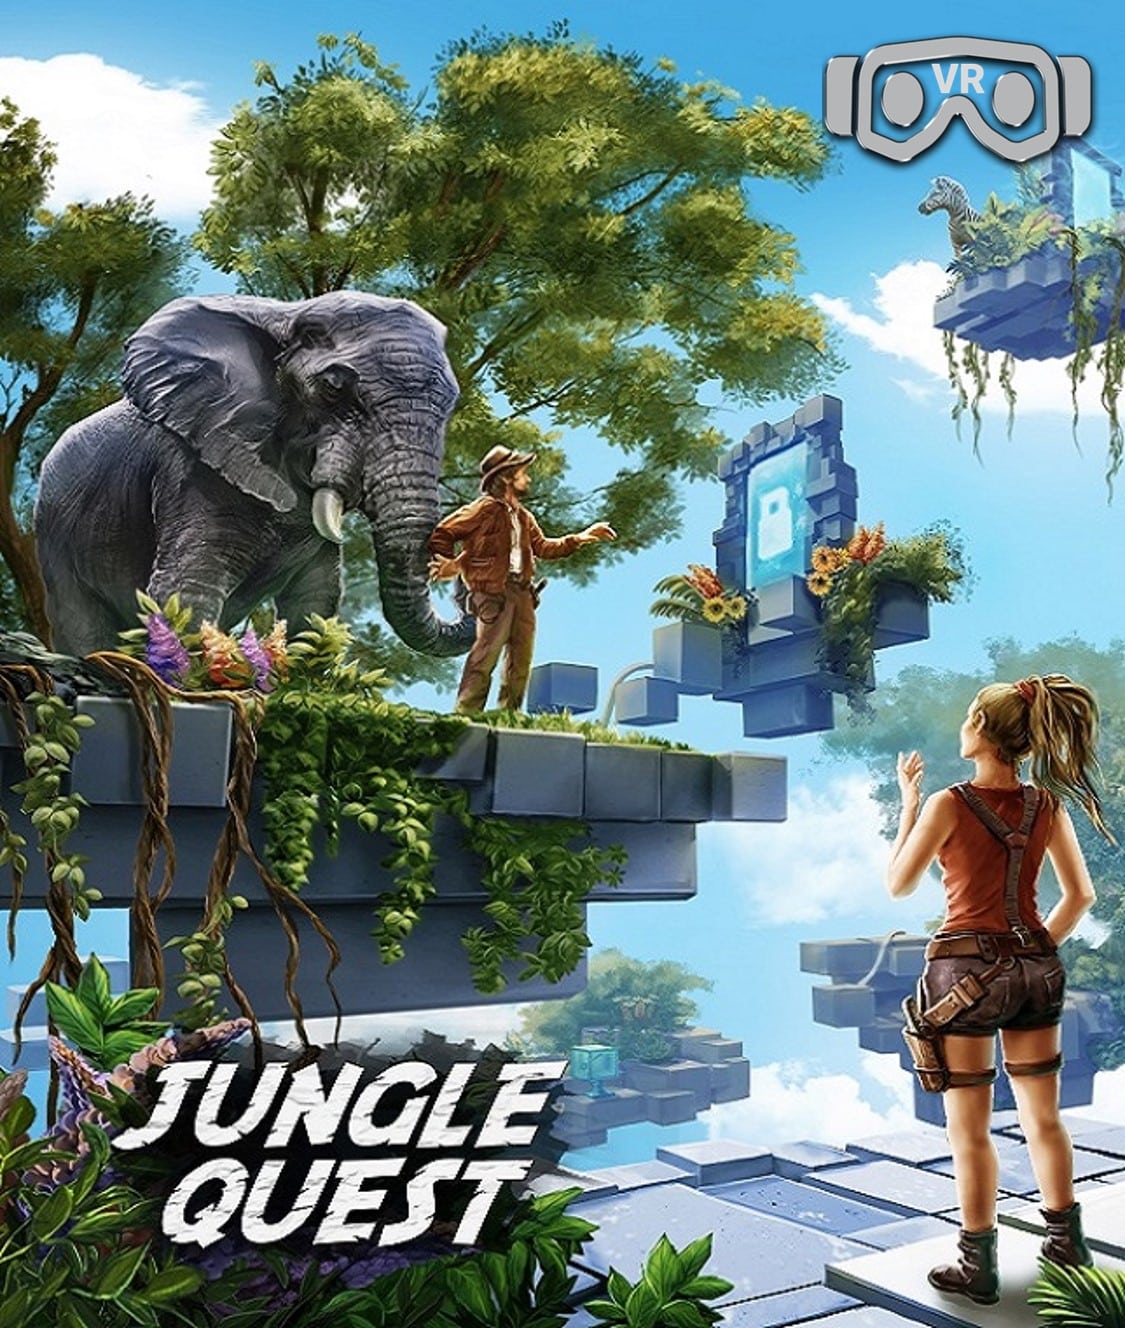 Jungle-Quest-Entermission-Virtual-Reality-Escape-Room-644x760-VR